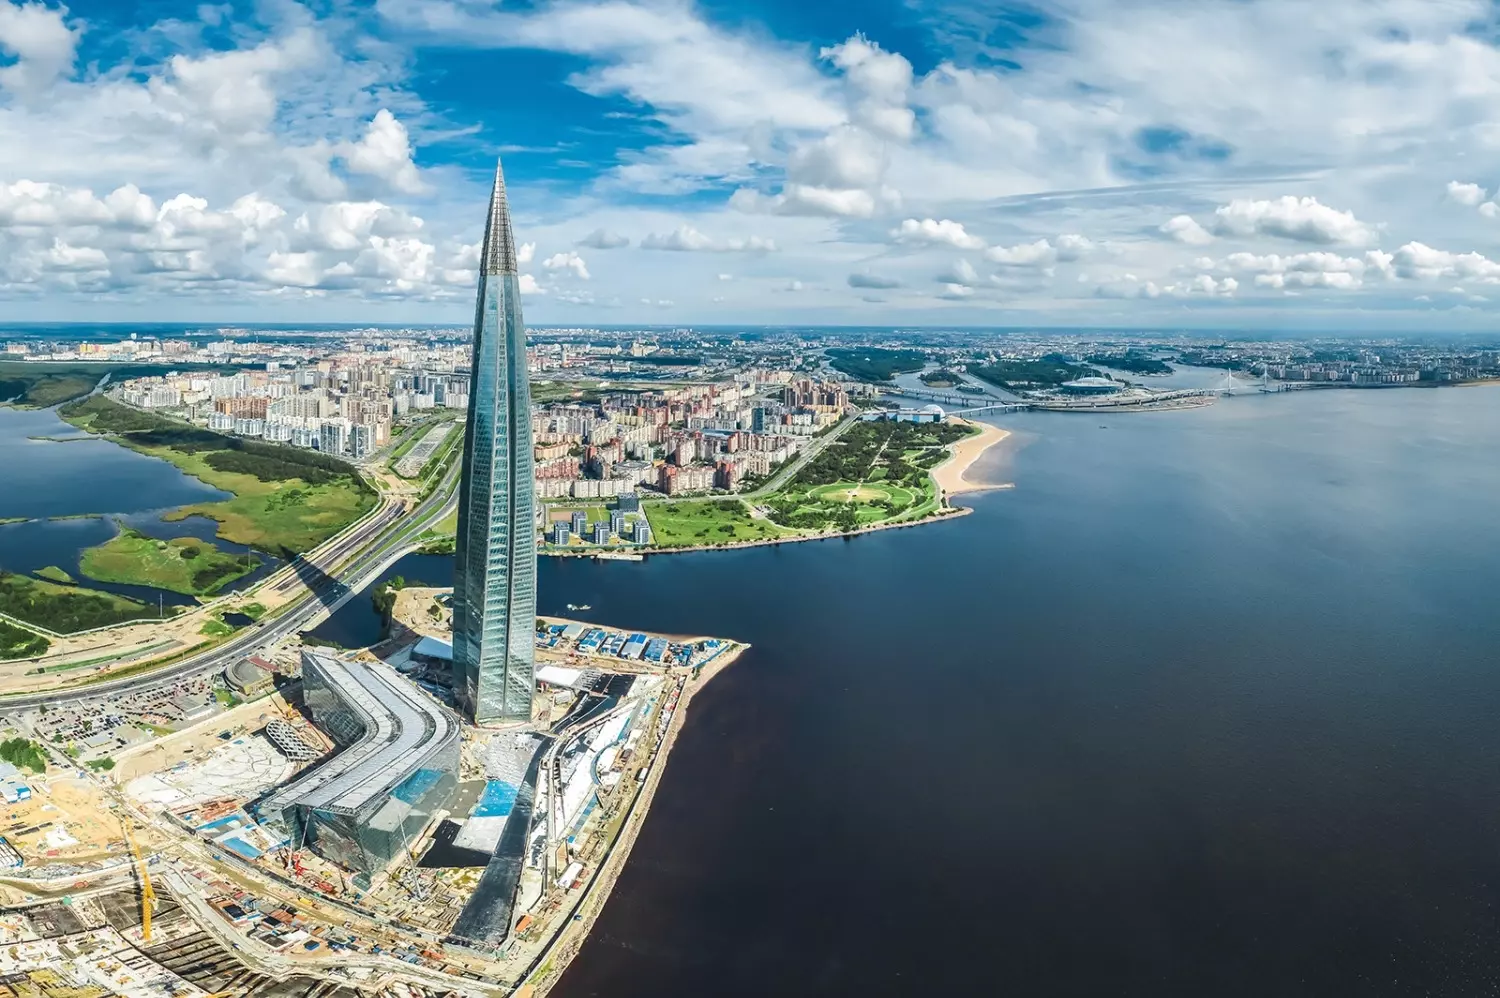 Штаб-квартира "Газпрома" "Лахта Центр" за $1,77 млрд стала самым дорогим зданием мира, обогнав китайское "Тайбэй 101" и "Бурдж Халифа" в Дубае